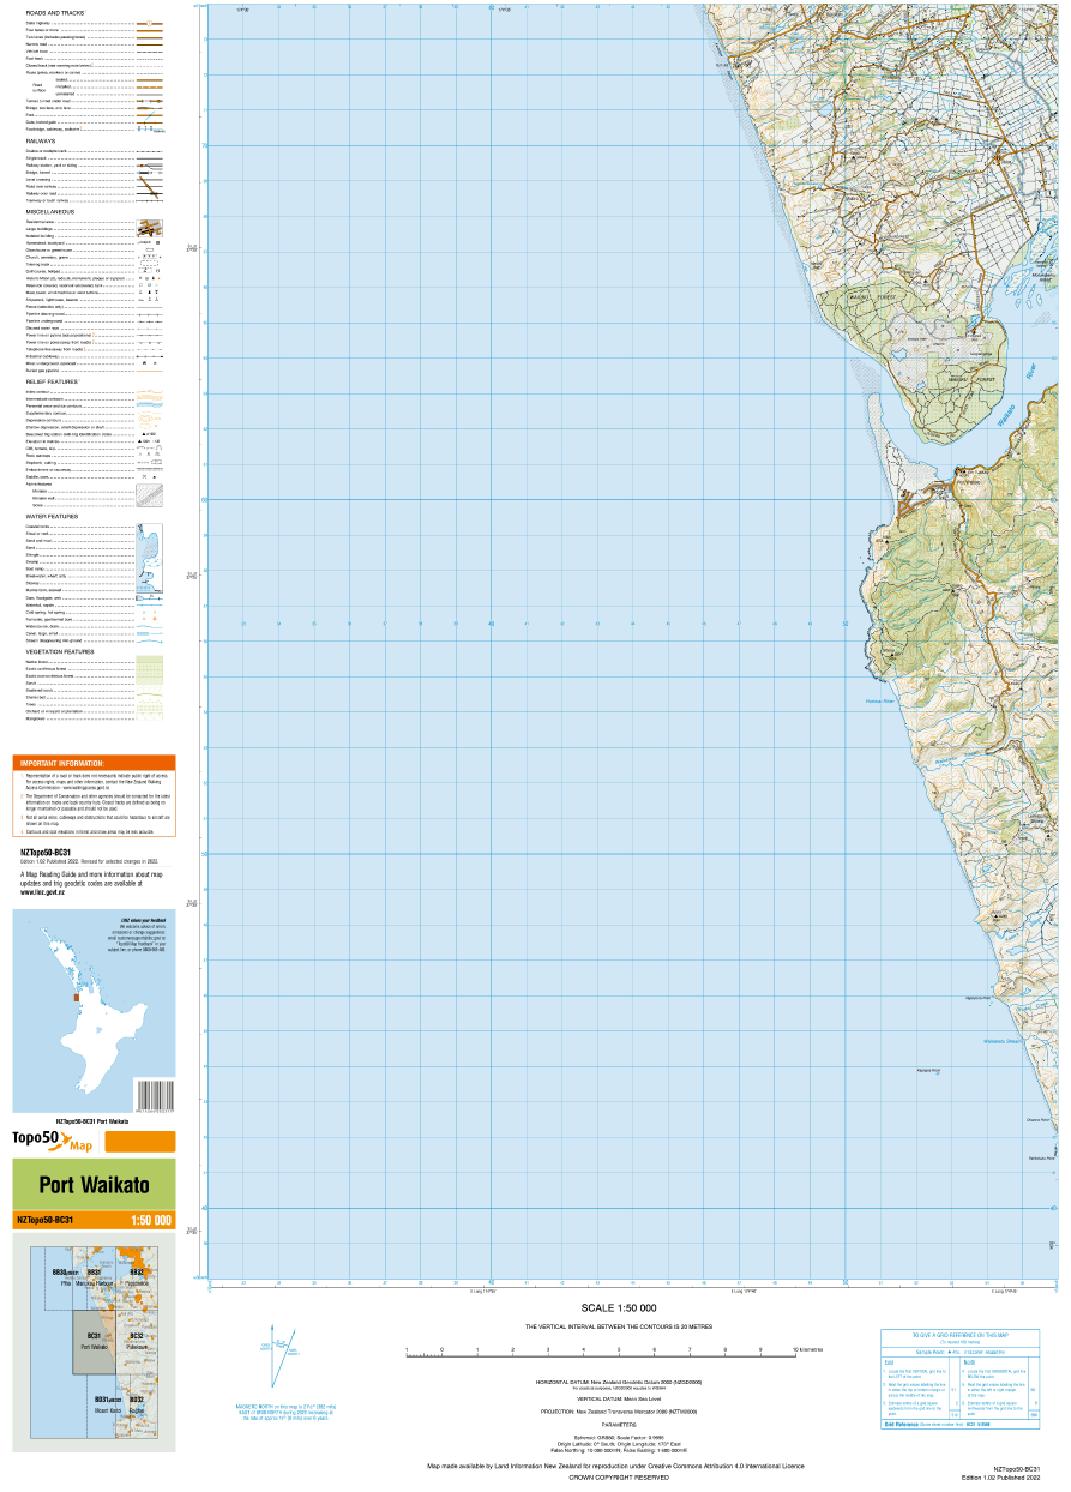 Topo map of Port Waikato